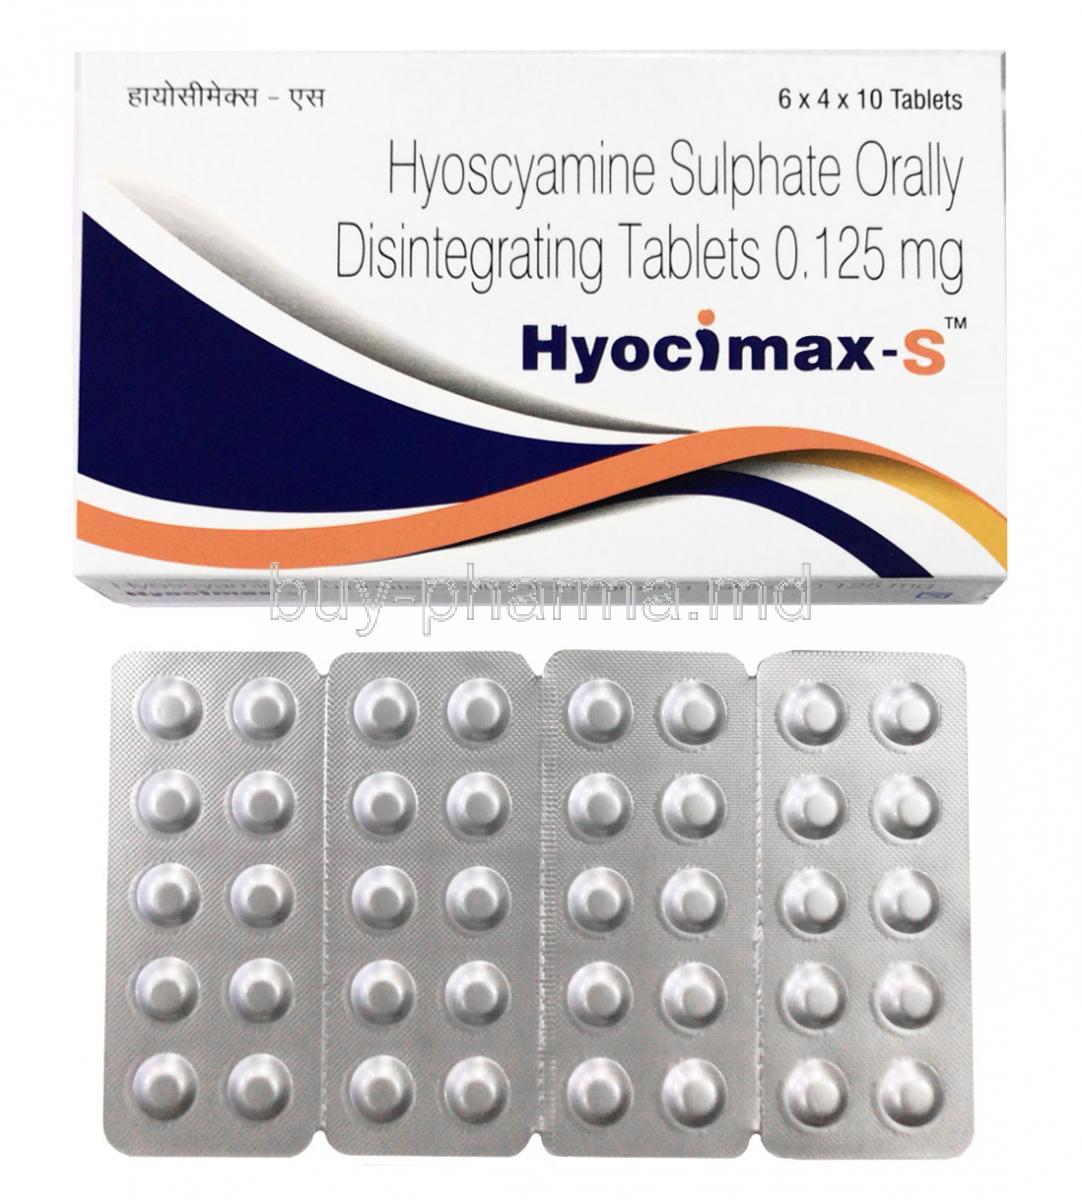 Hyocimax-S, Hyoscyamine box and tablets